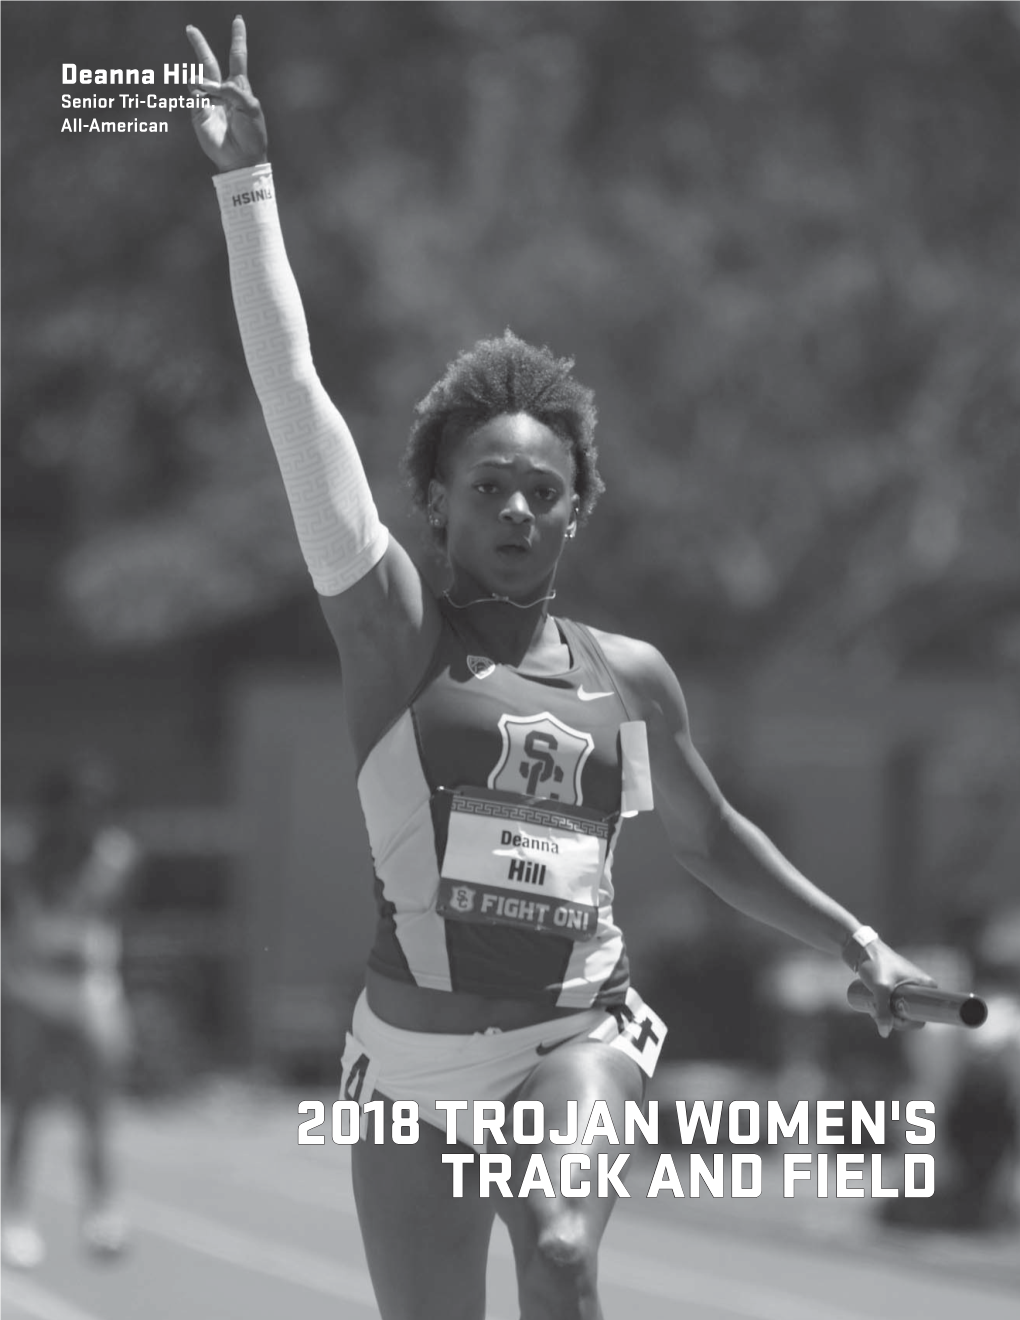 2018 Trojan Women's Track and Field